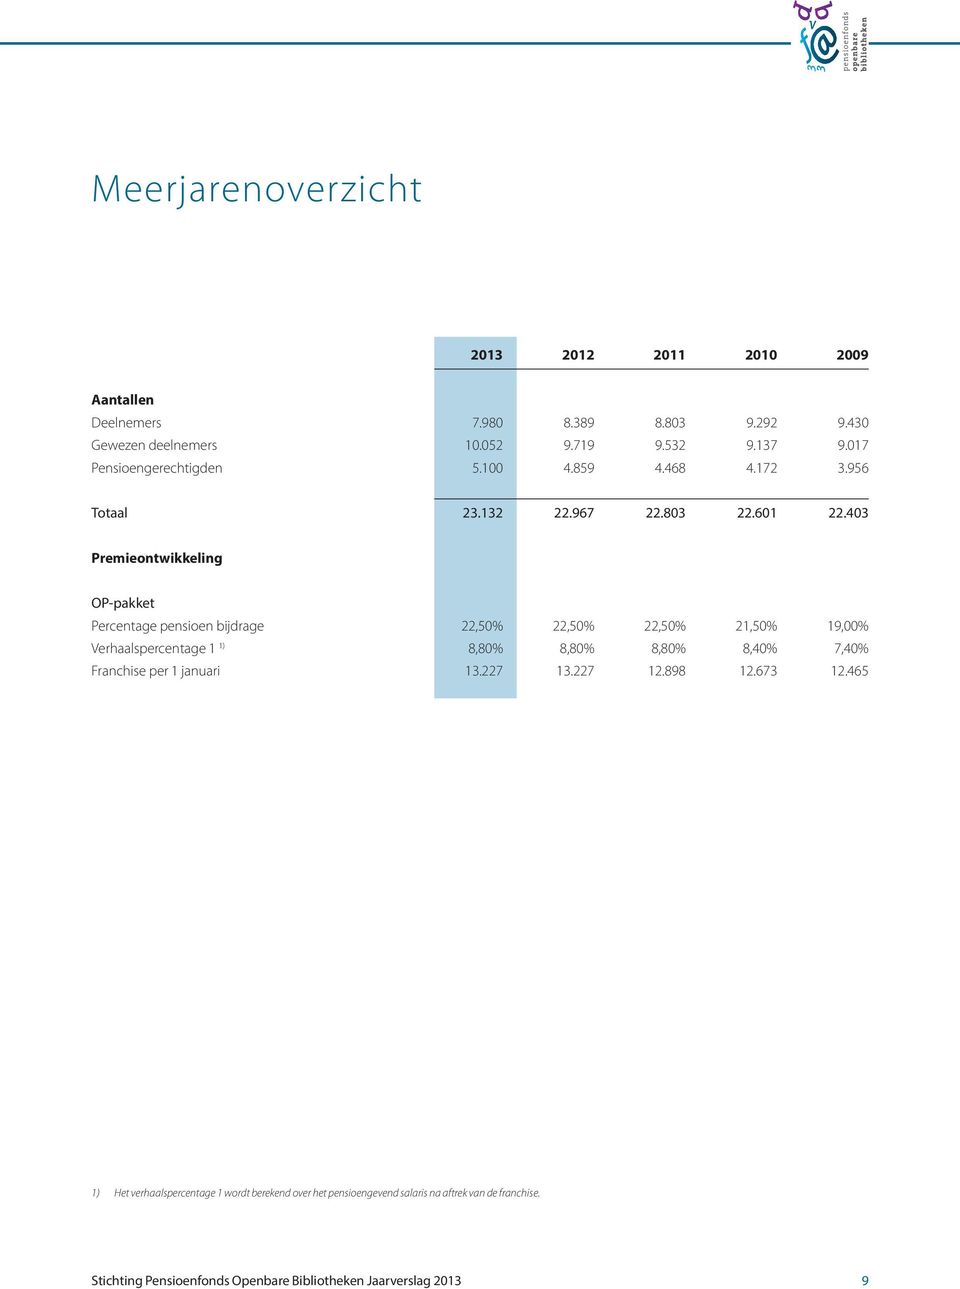 403 Premieontwikkeling OP-pakket Percentage pensioen bijdrage 22,50% 22,50% 22,50% 21,50% 19,00% Verhaalspercentage 1 1) 8,80% 8,80% 8,80% 8,40% 7,40%